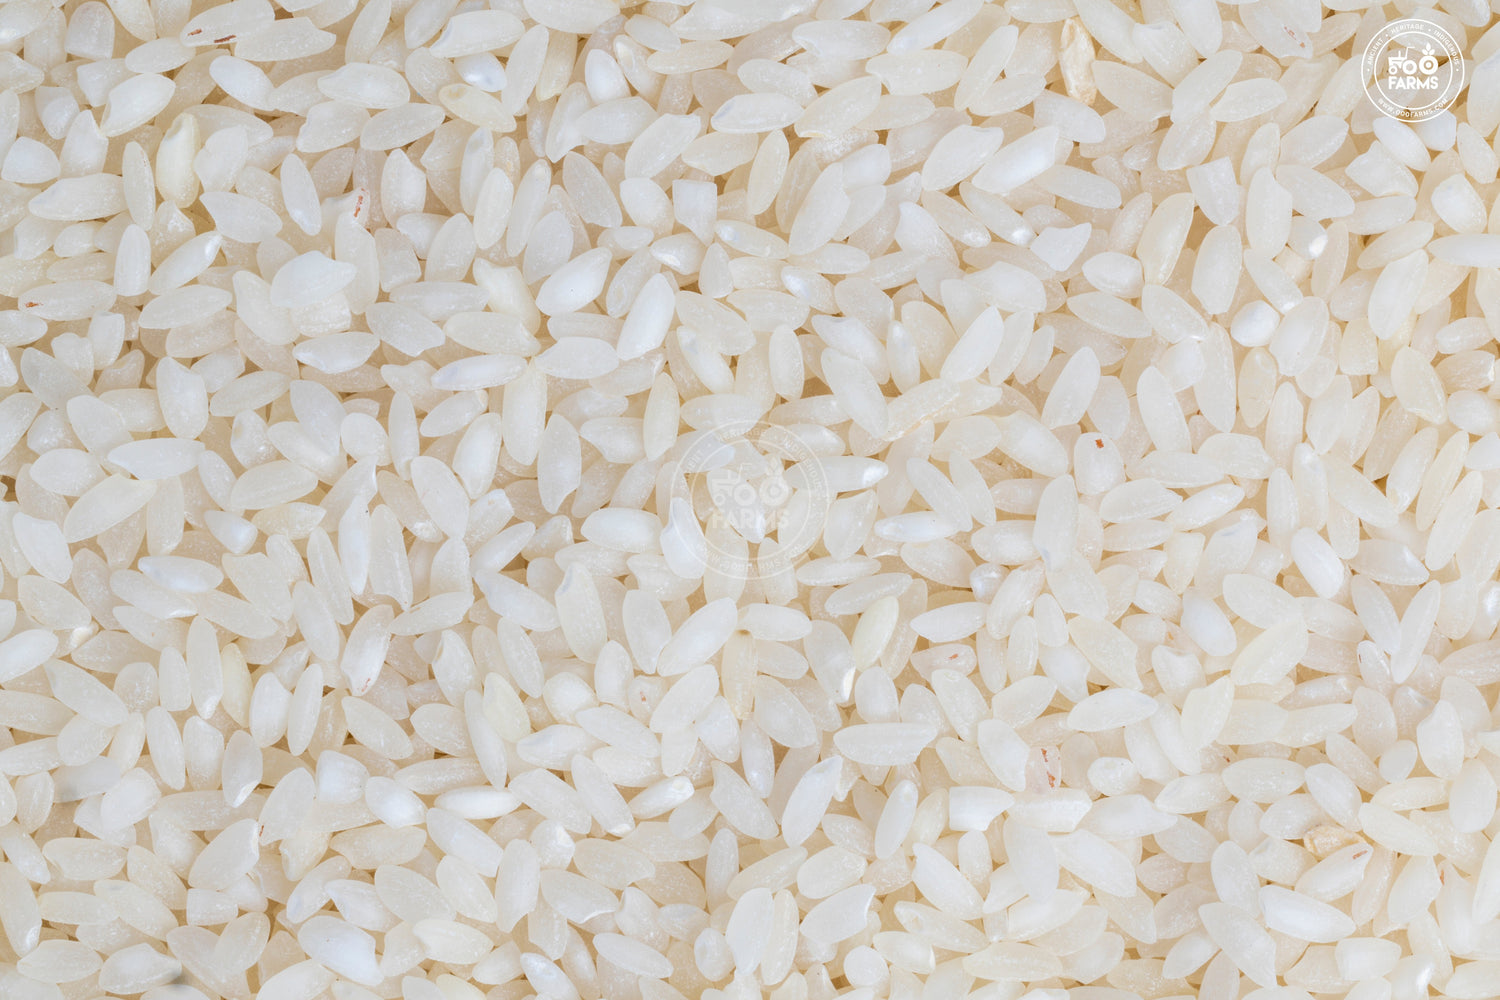 OOO Farms Ambemohar Rice (Semipolished)